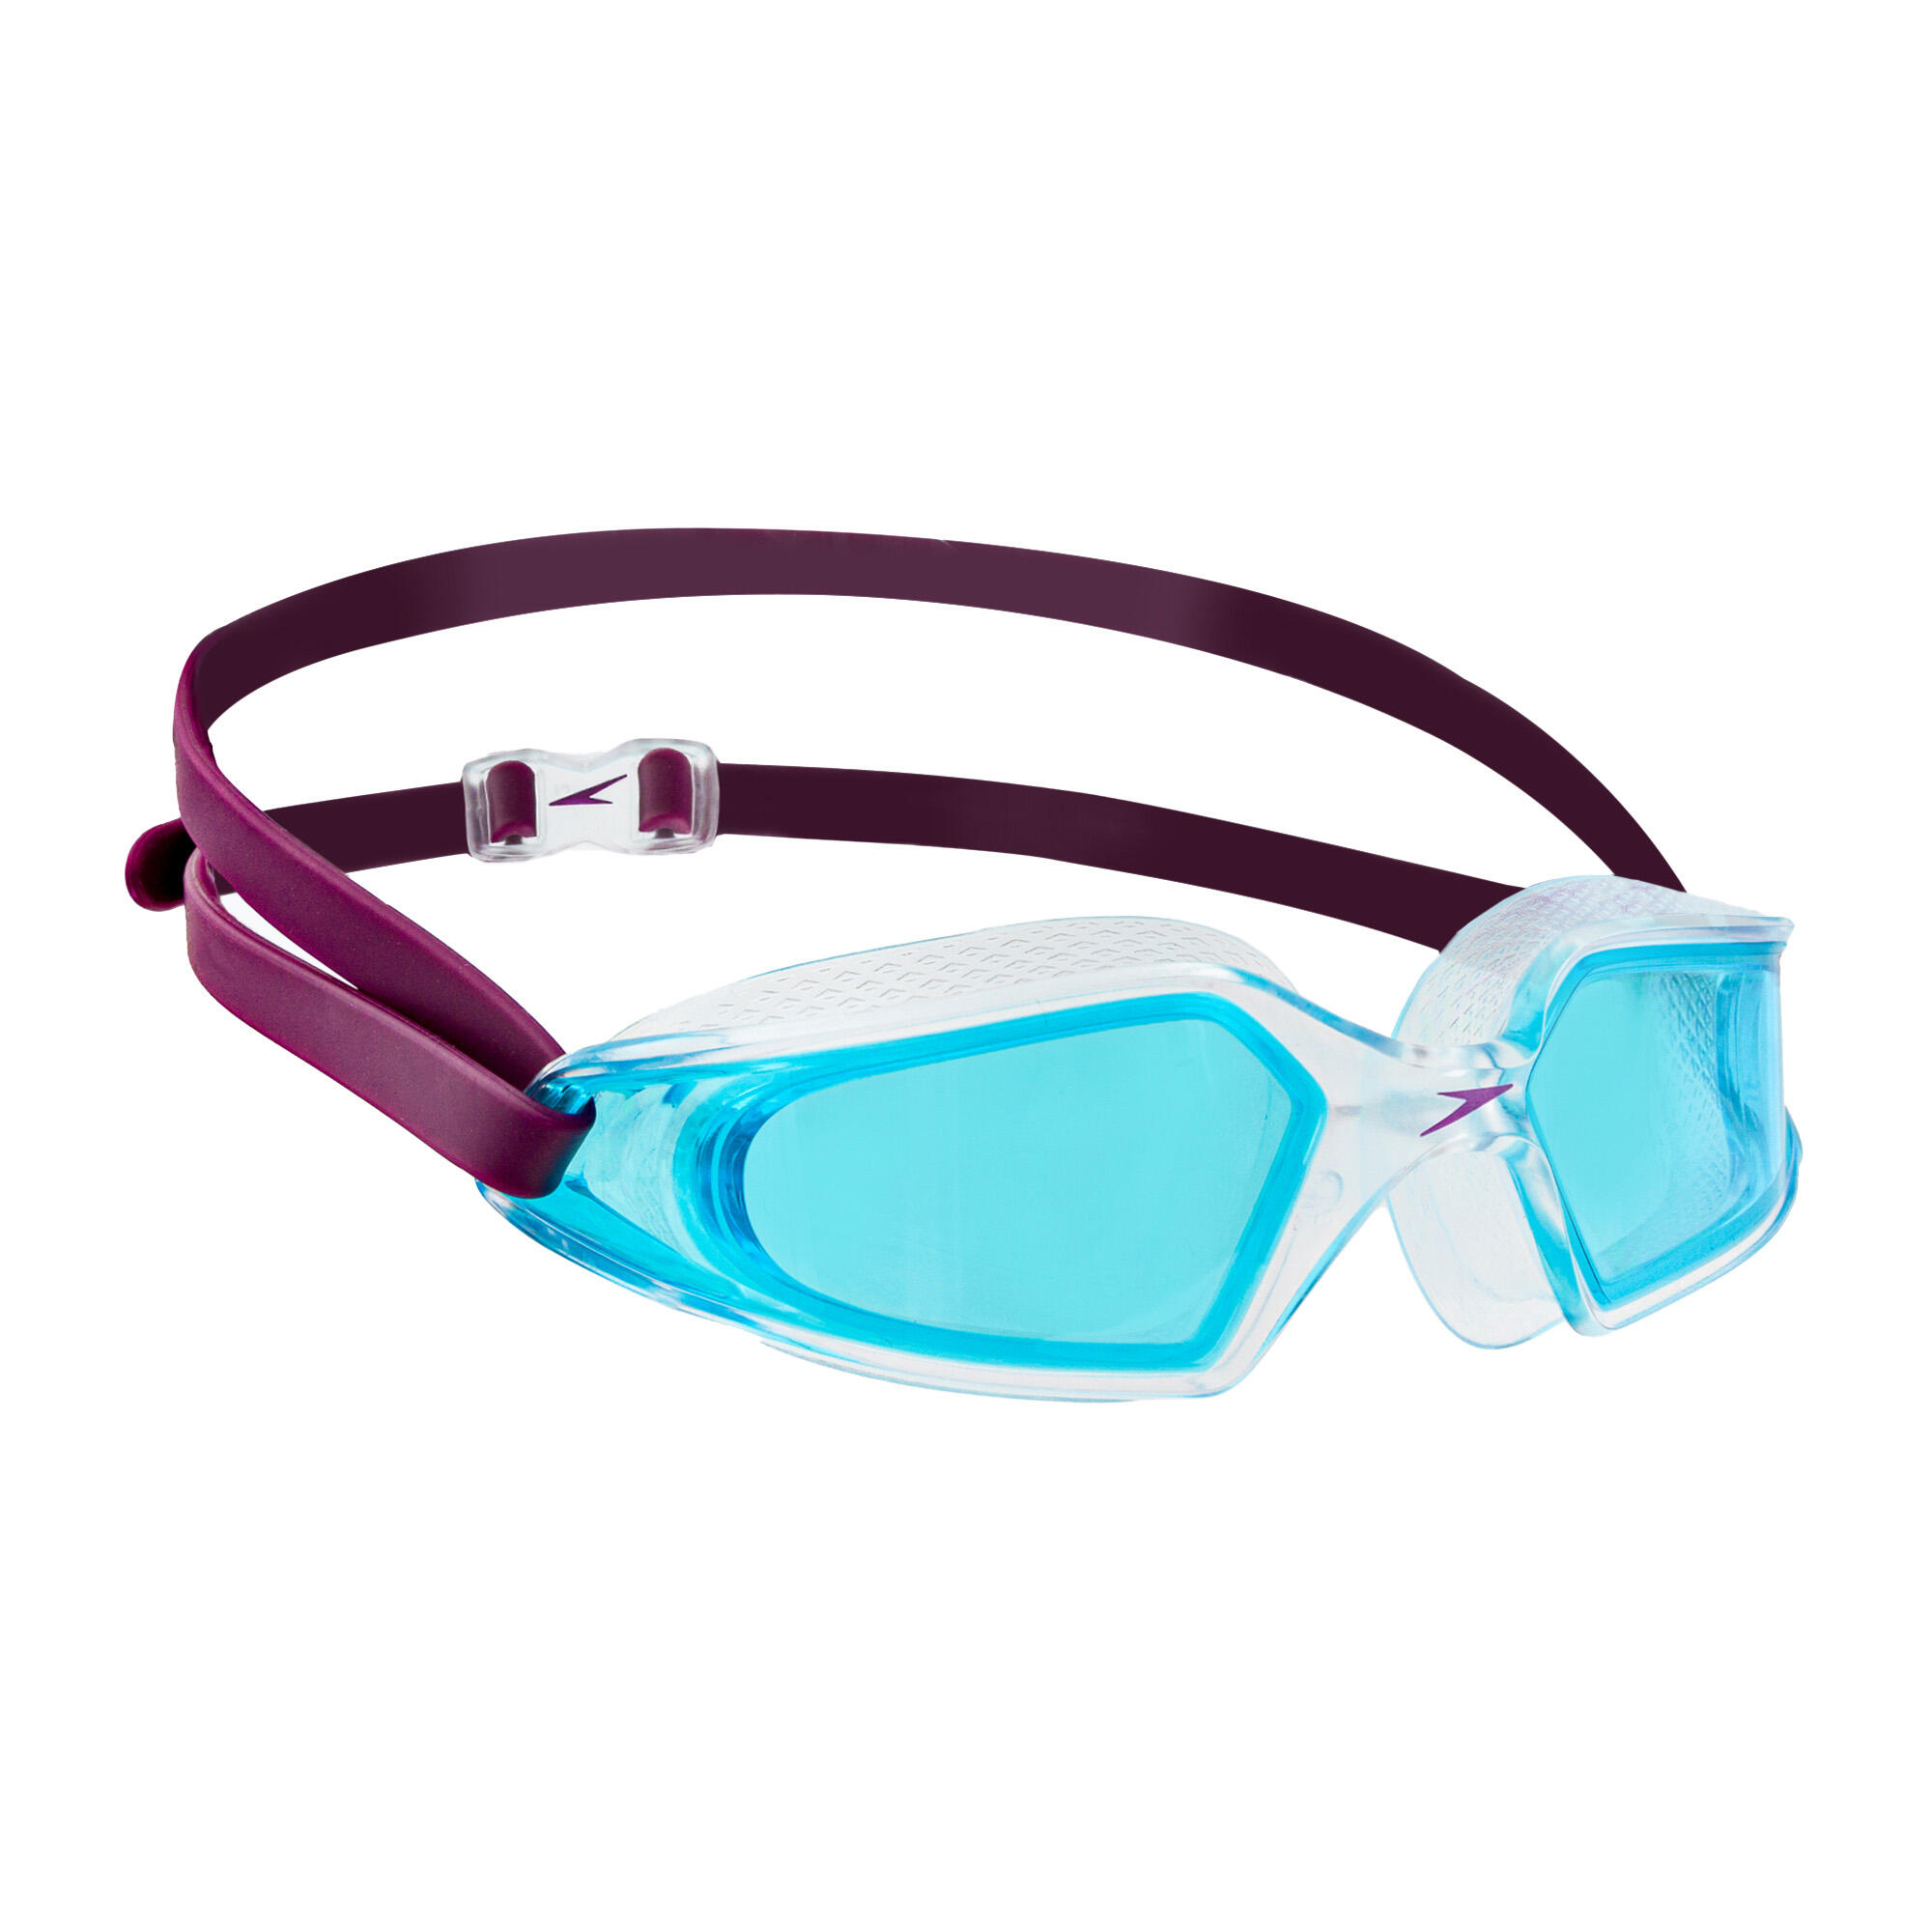 SPEEDO Speedo Hydropulse Goggles, Purple/Blue